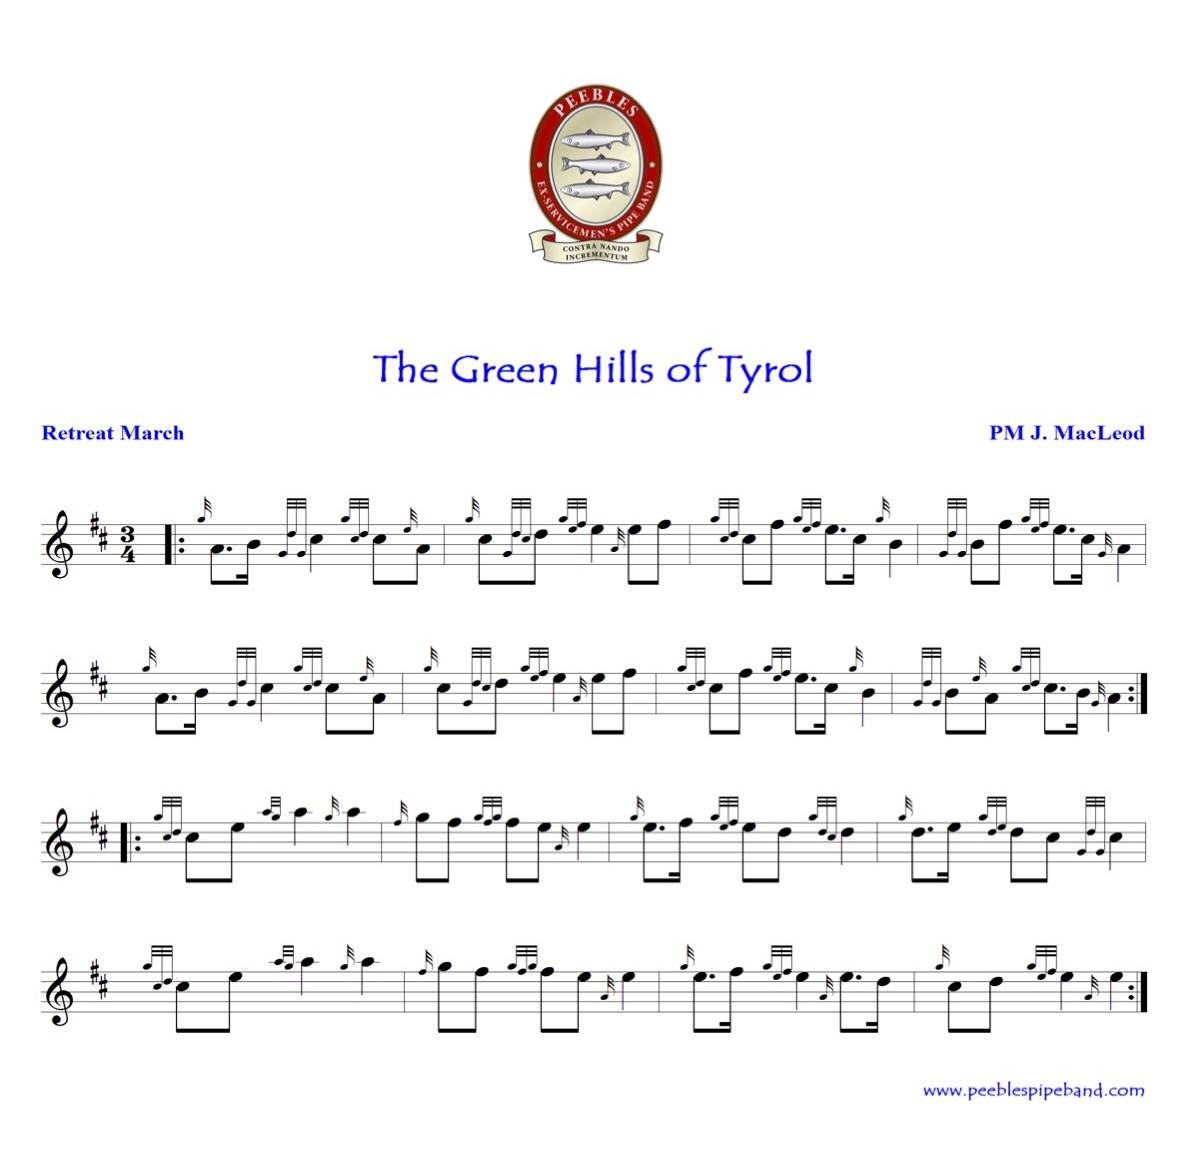 Green Hills of Tyroll